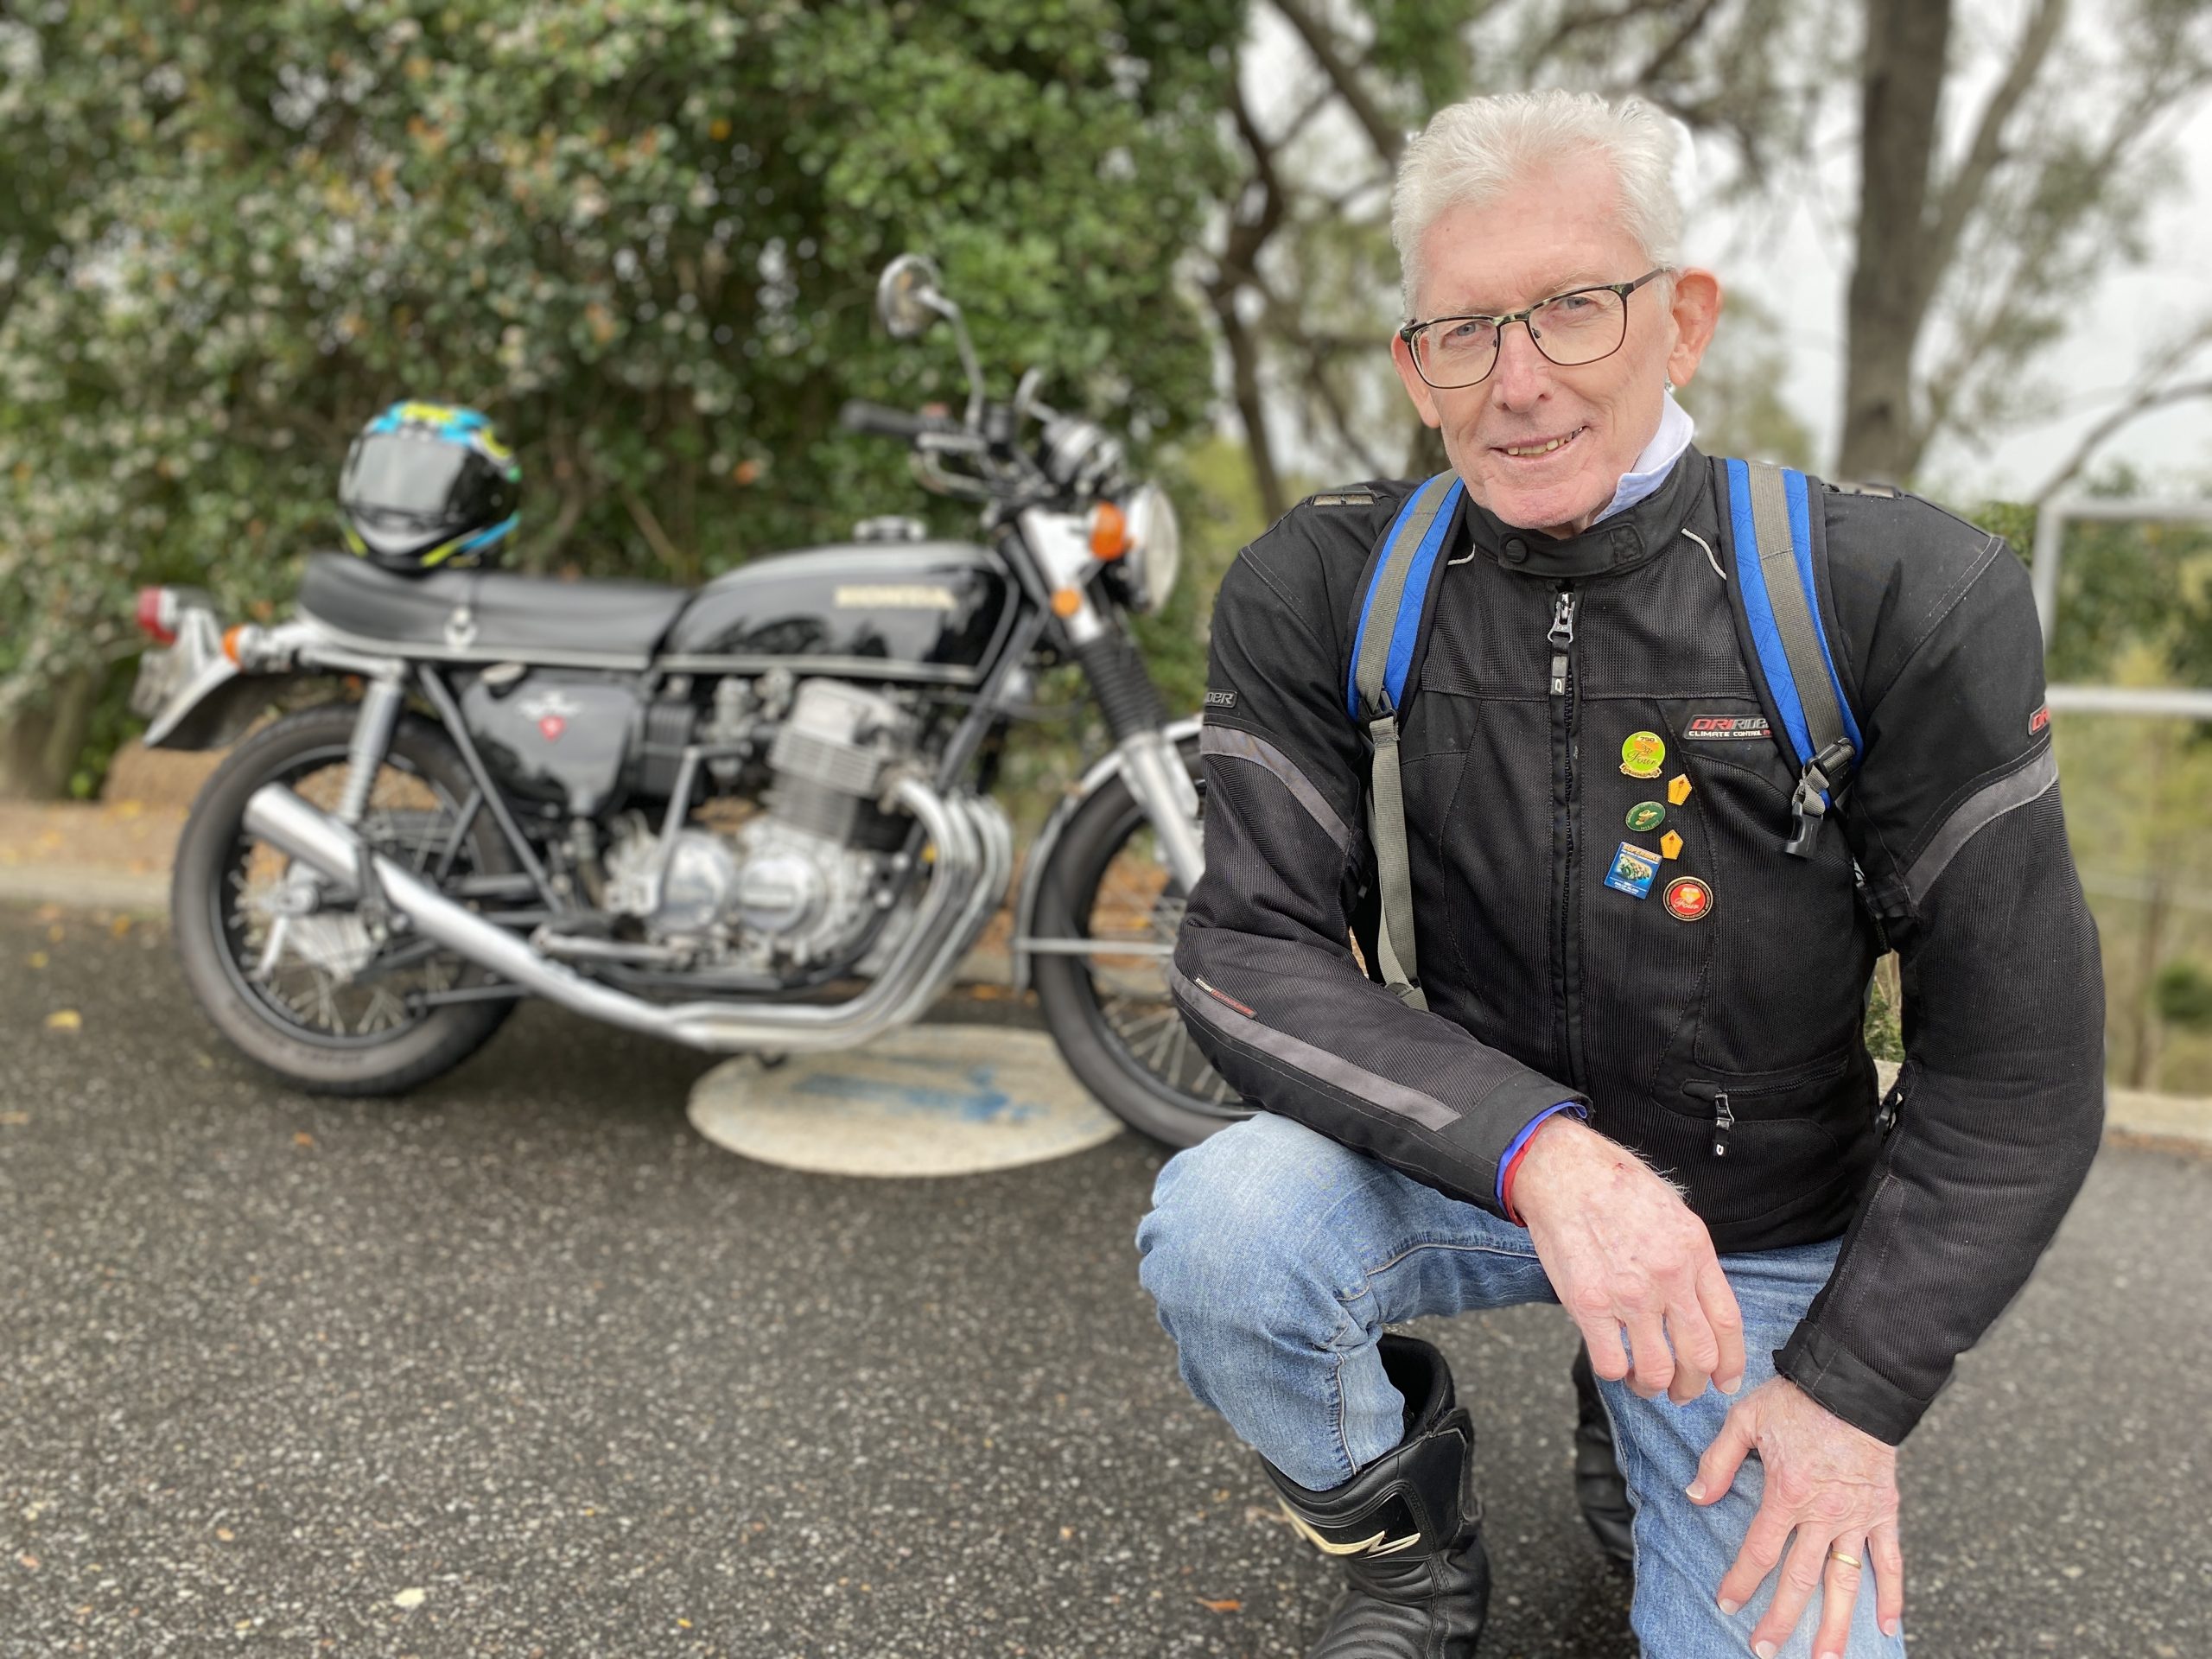 Queensland Motorcycle Council president Graham Keys